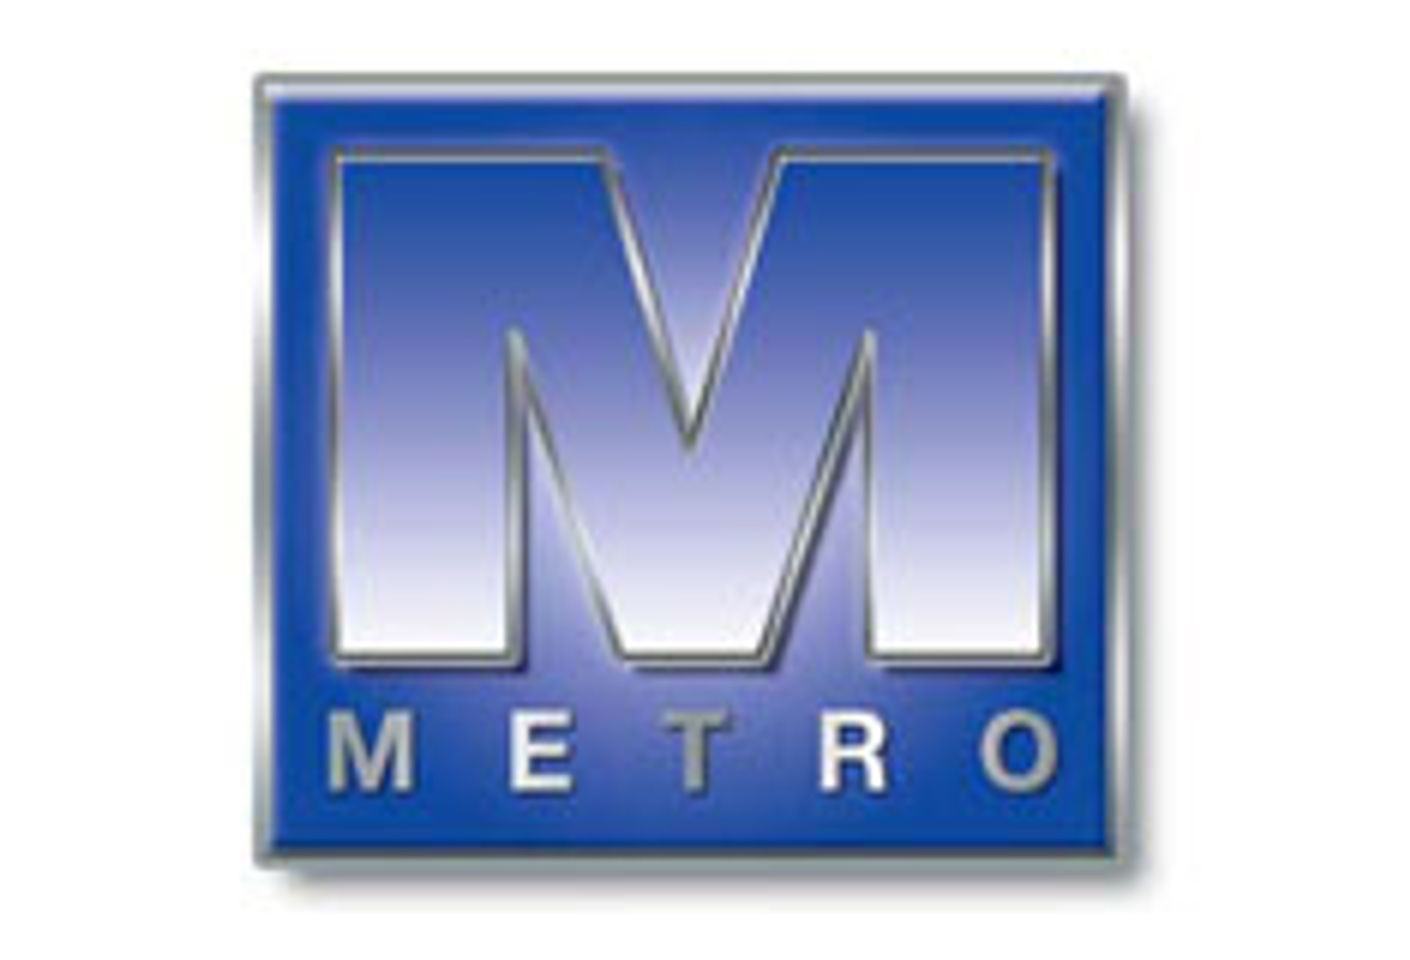 Metro Announces New Publication